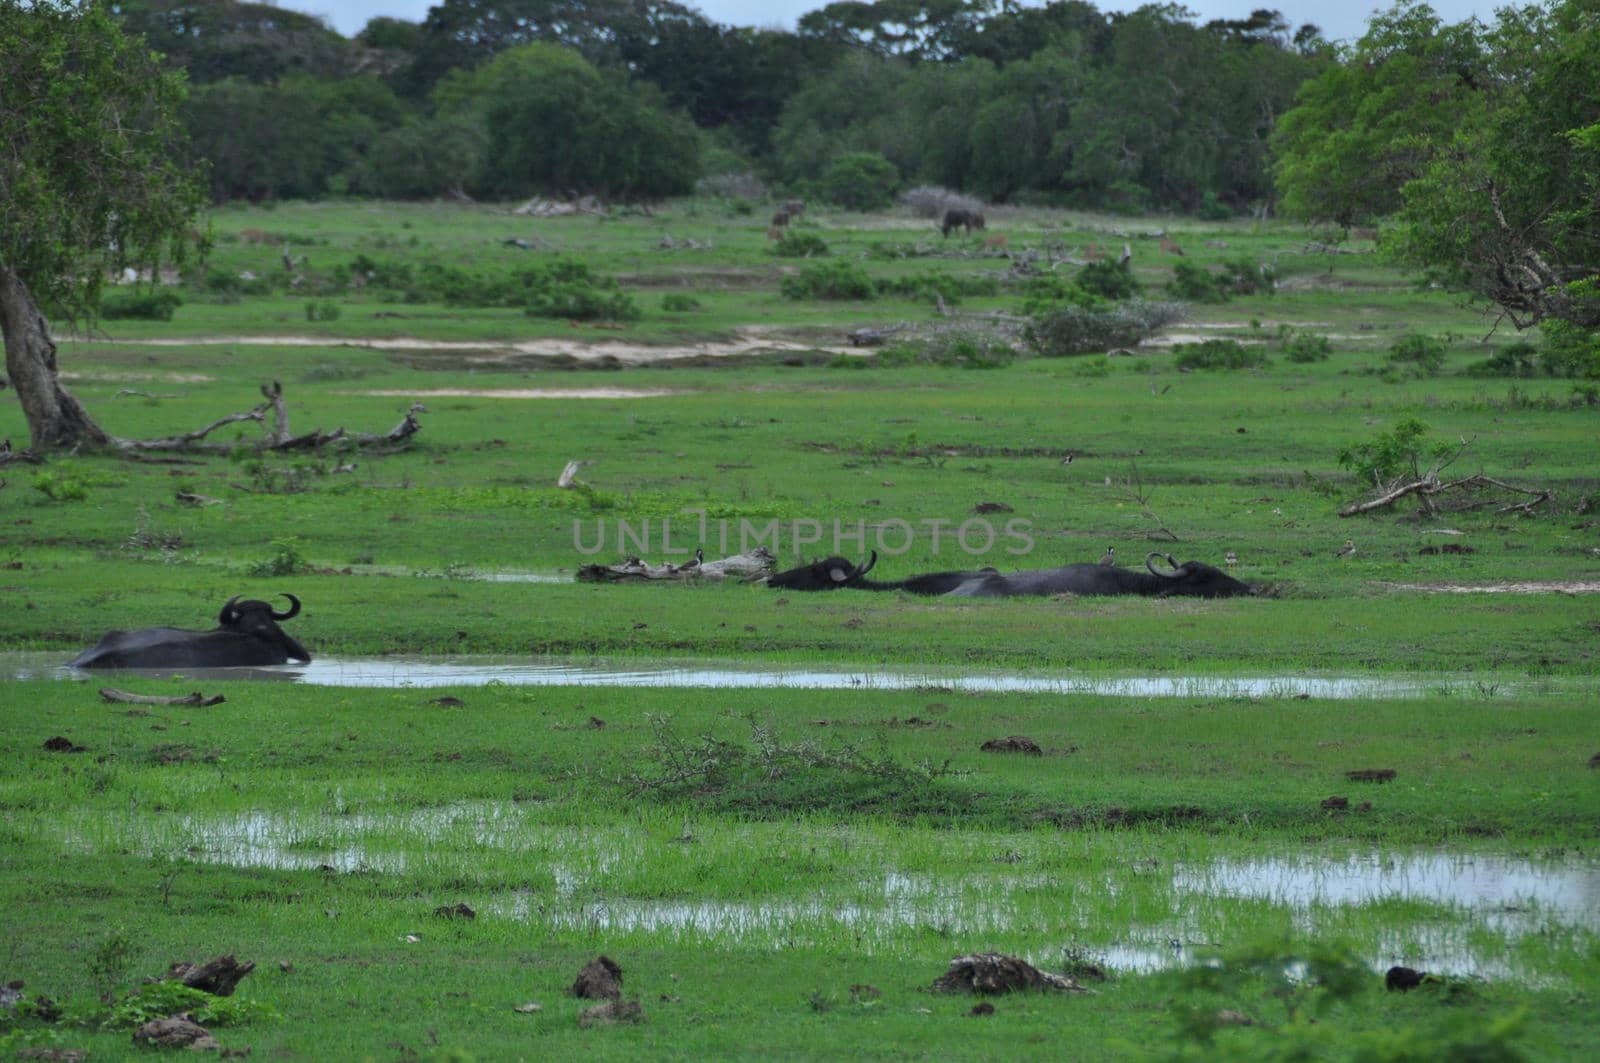 Water buffaloes in Yala National Park, Sri Lanka by Capos